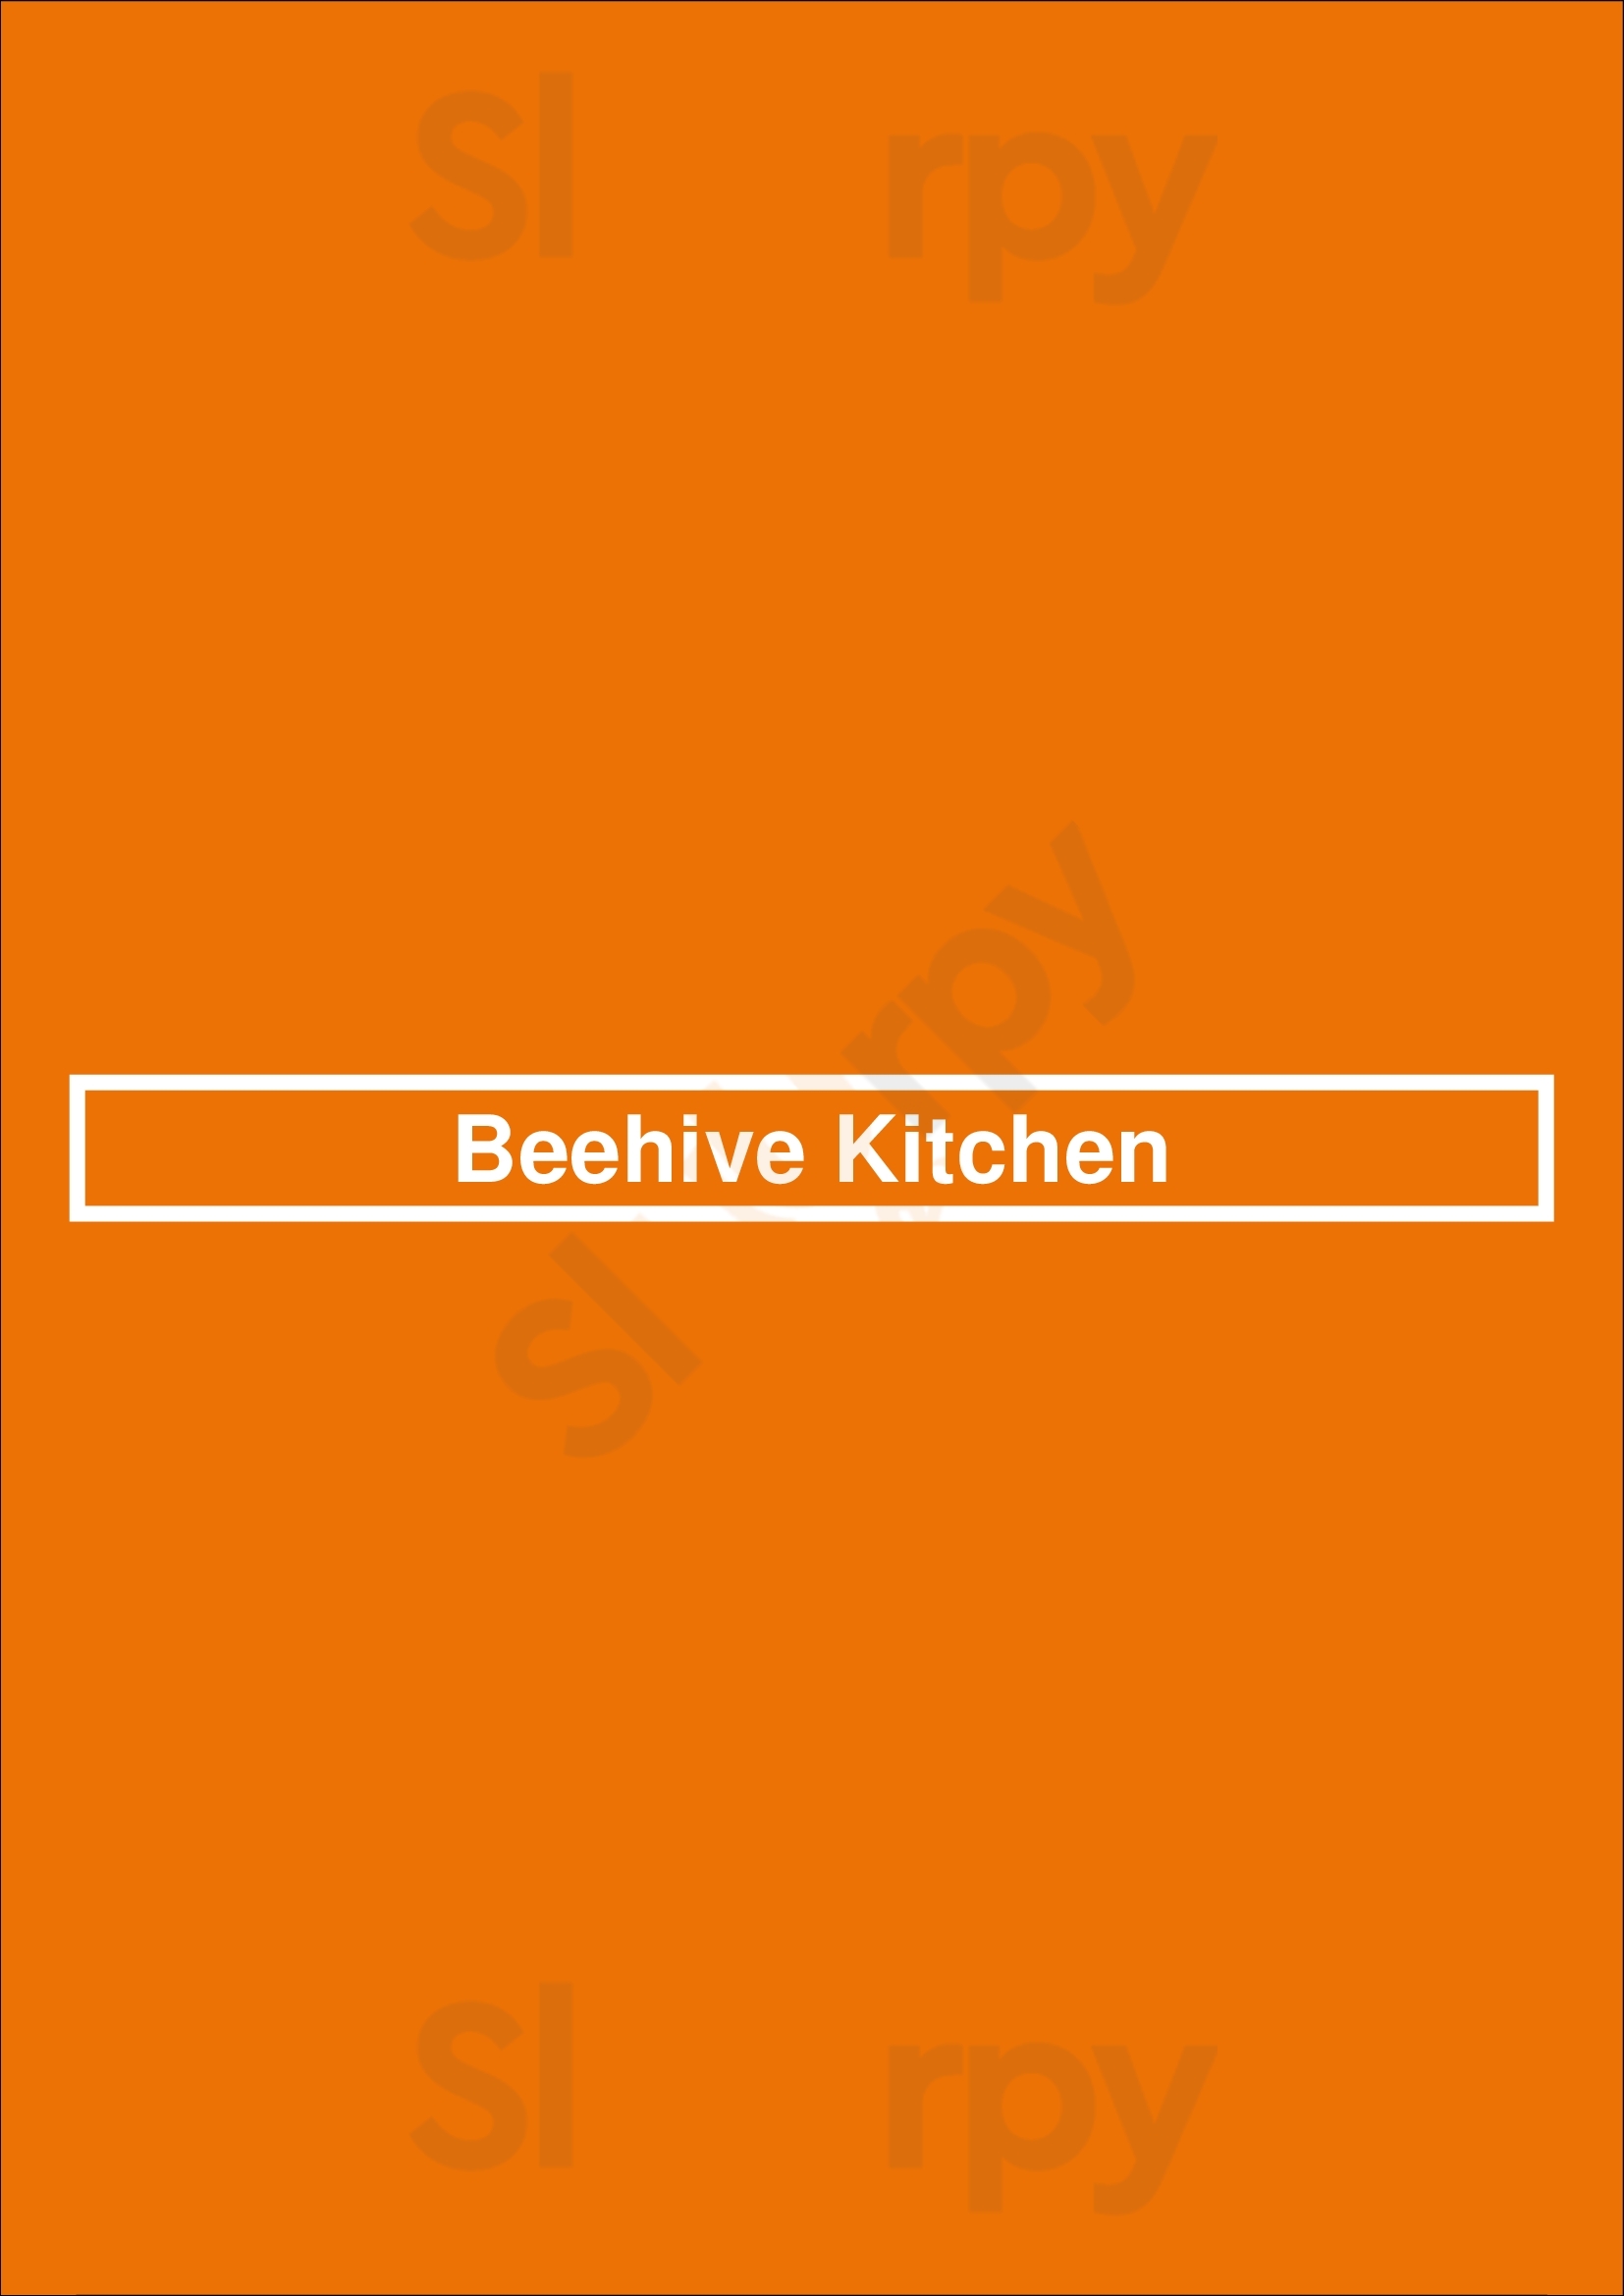 Beehive Kitchen Fort Lauderdale Menu - 1